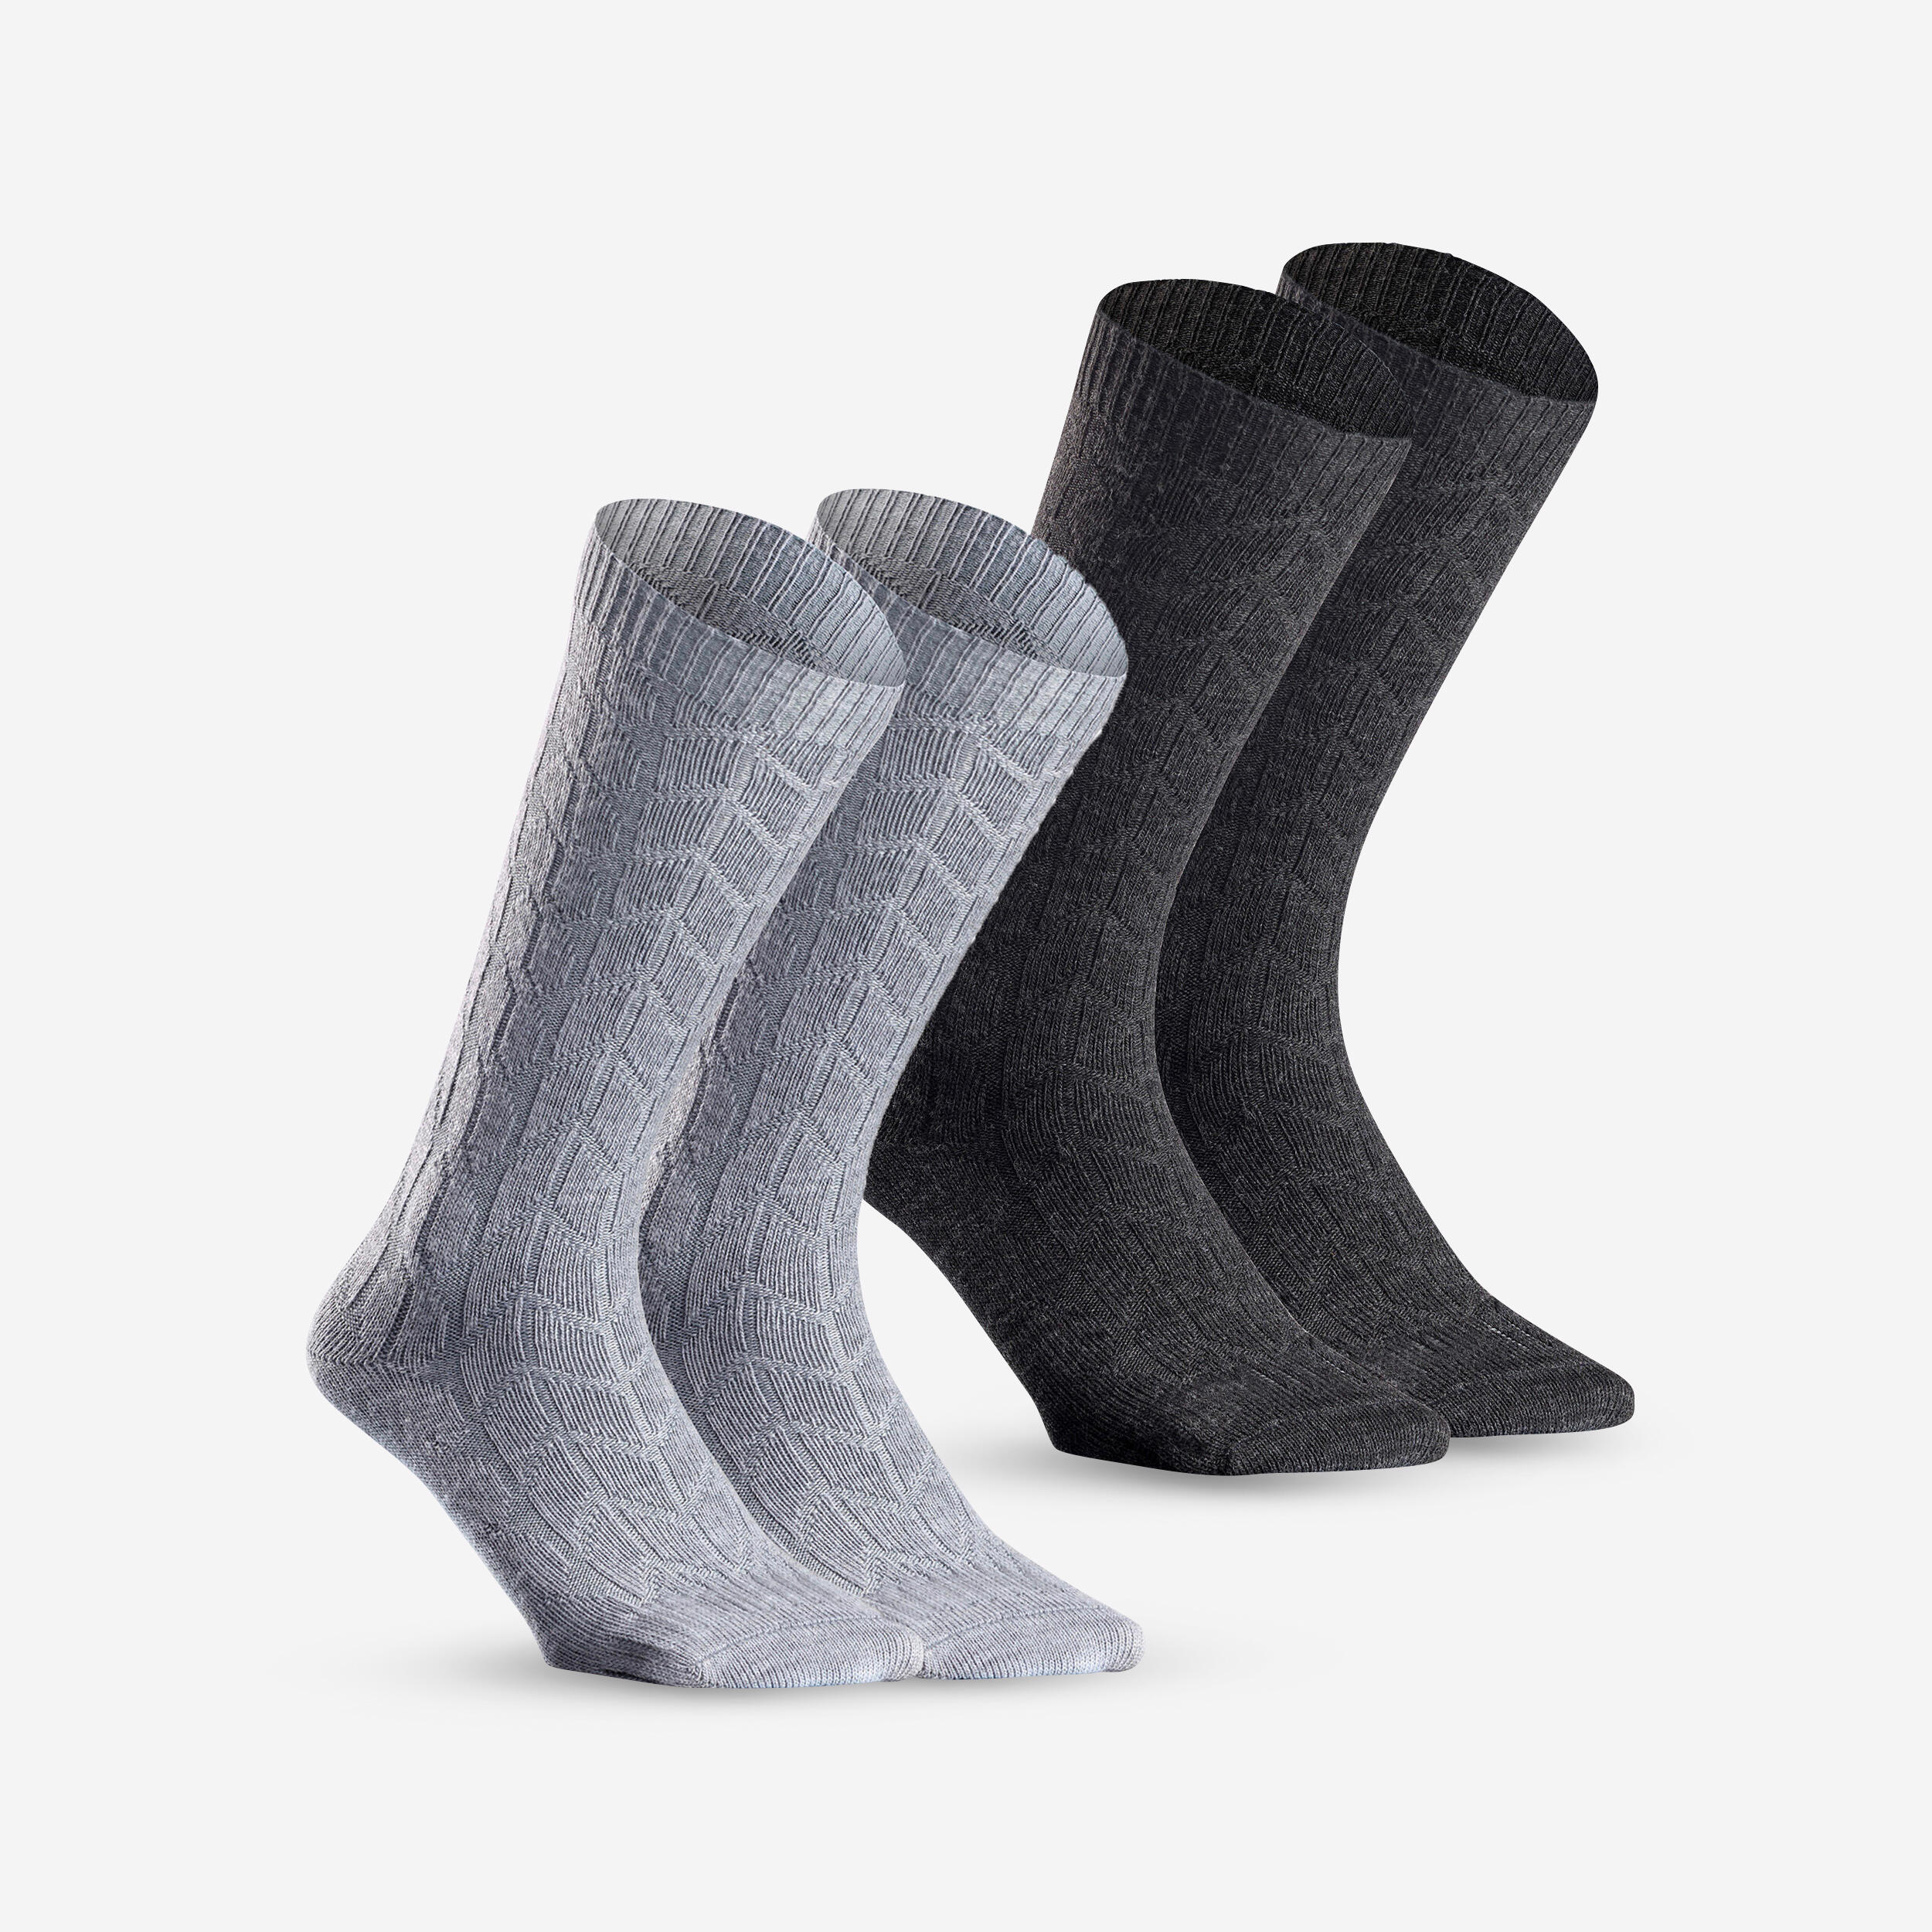 QUECHUA Warm hiking socks - SH100 MID JACQUARD - 2 pairs